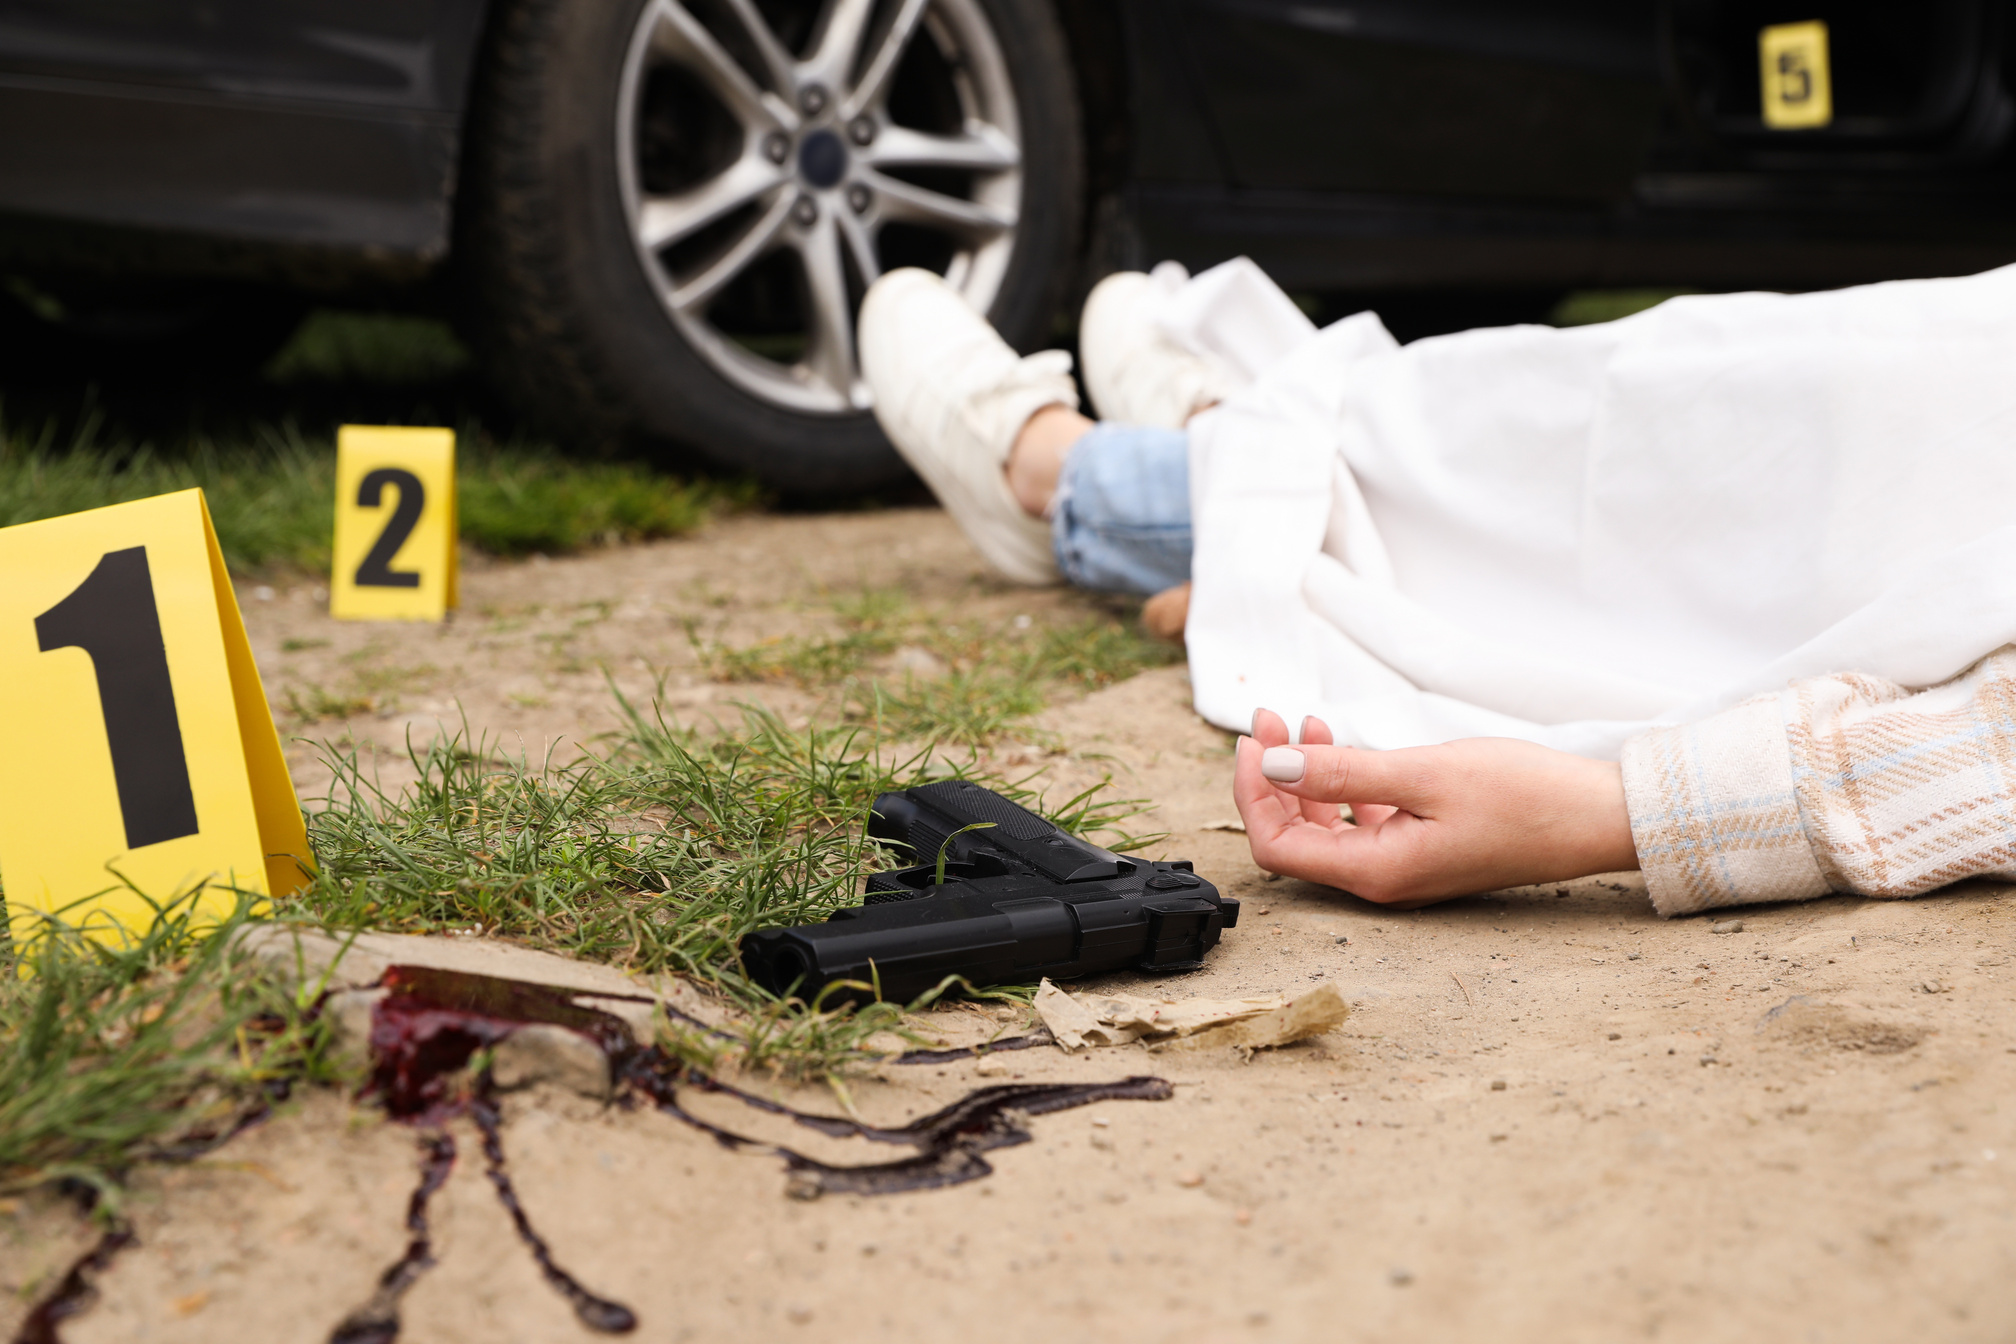 Crime Scene Markers, Dead Woman's Body and Gun Outdoors, Closeup